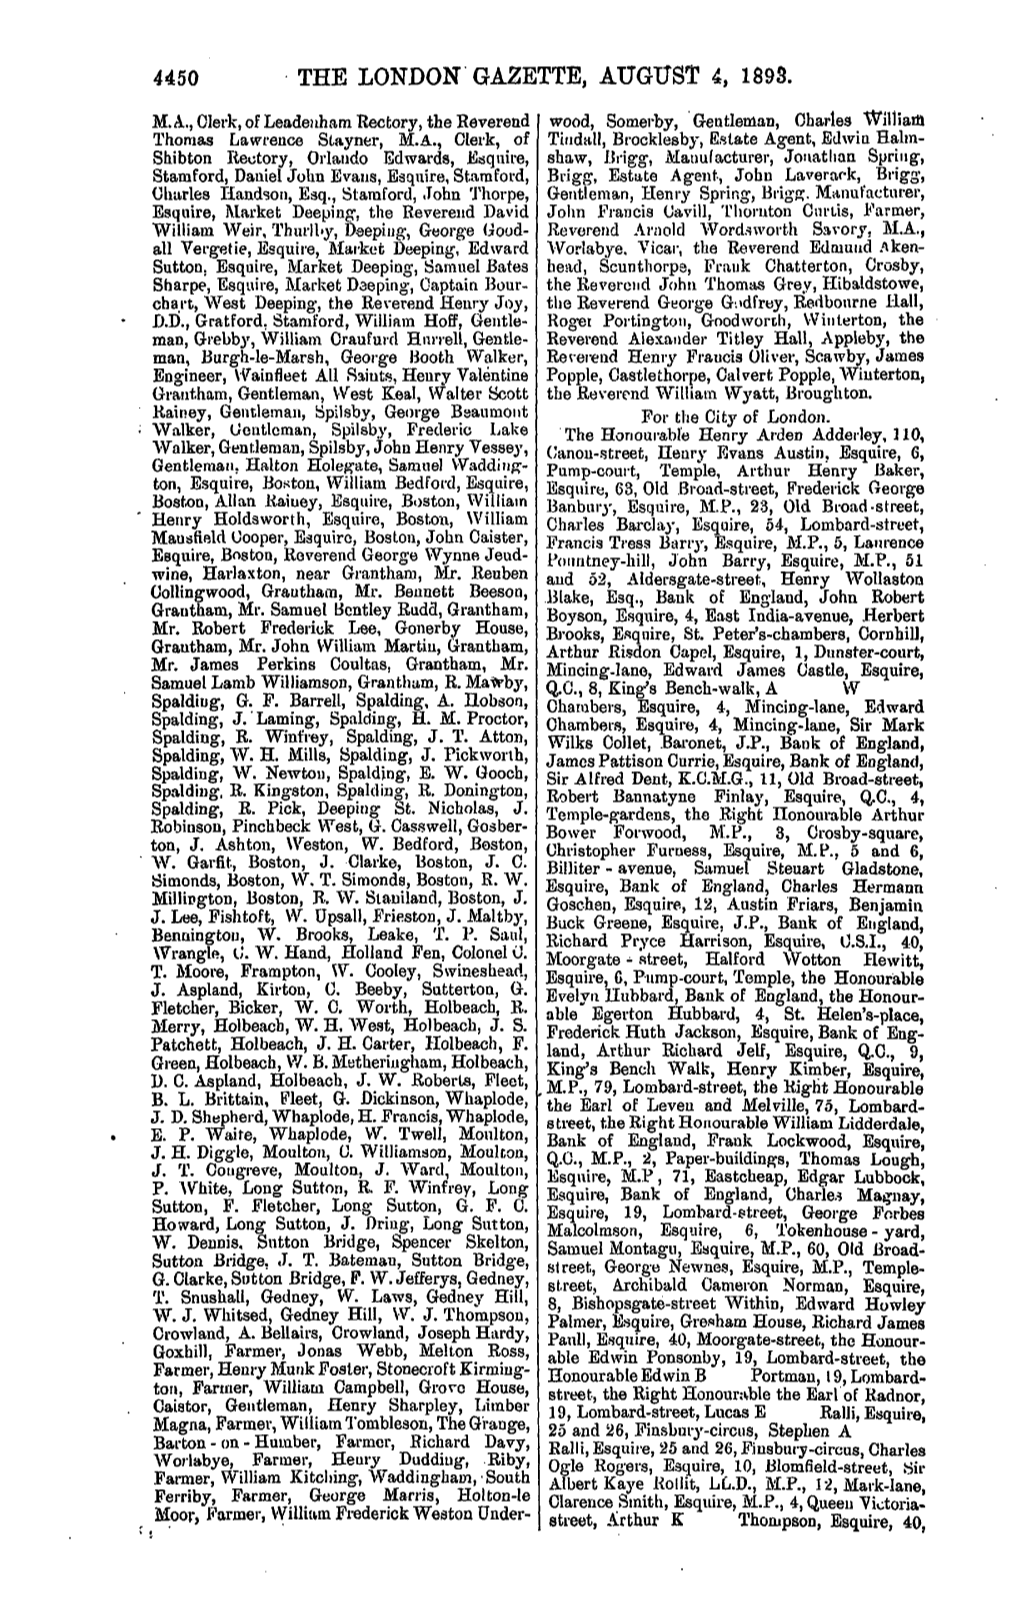 4450 the London Gazette, August 4, 1893